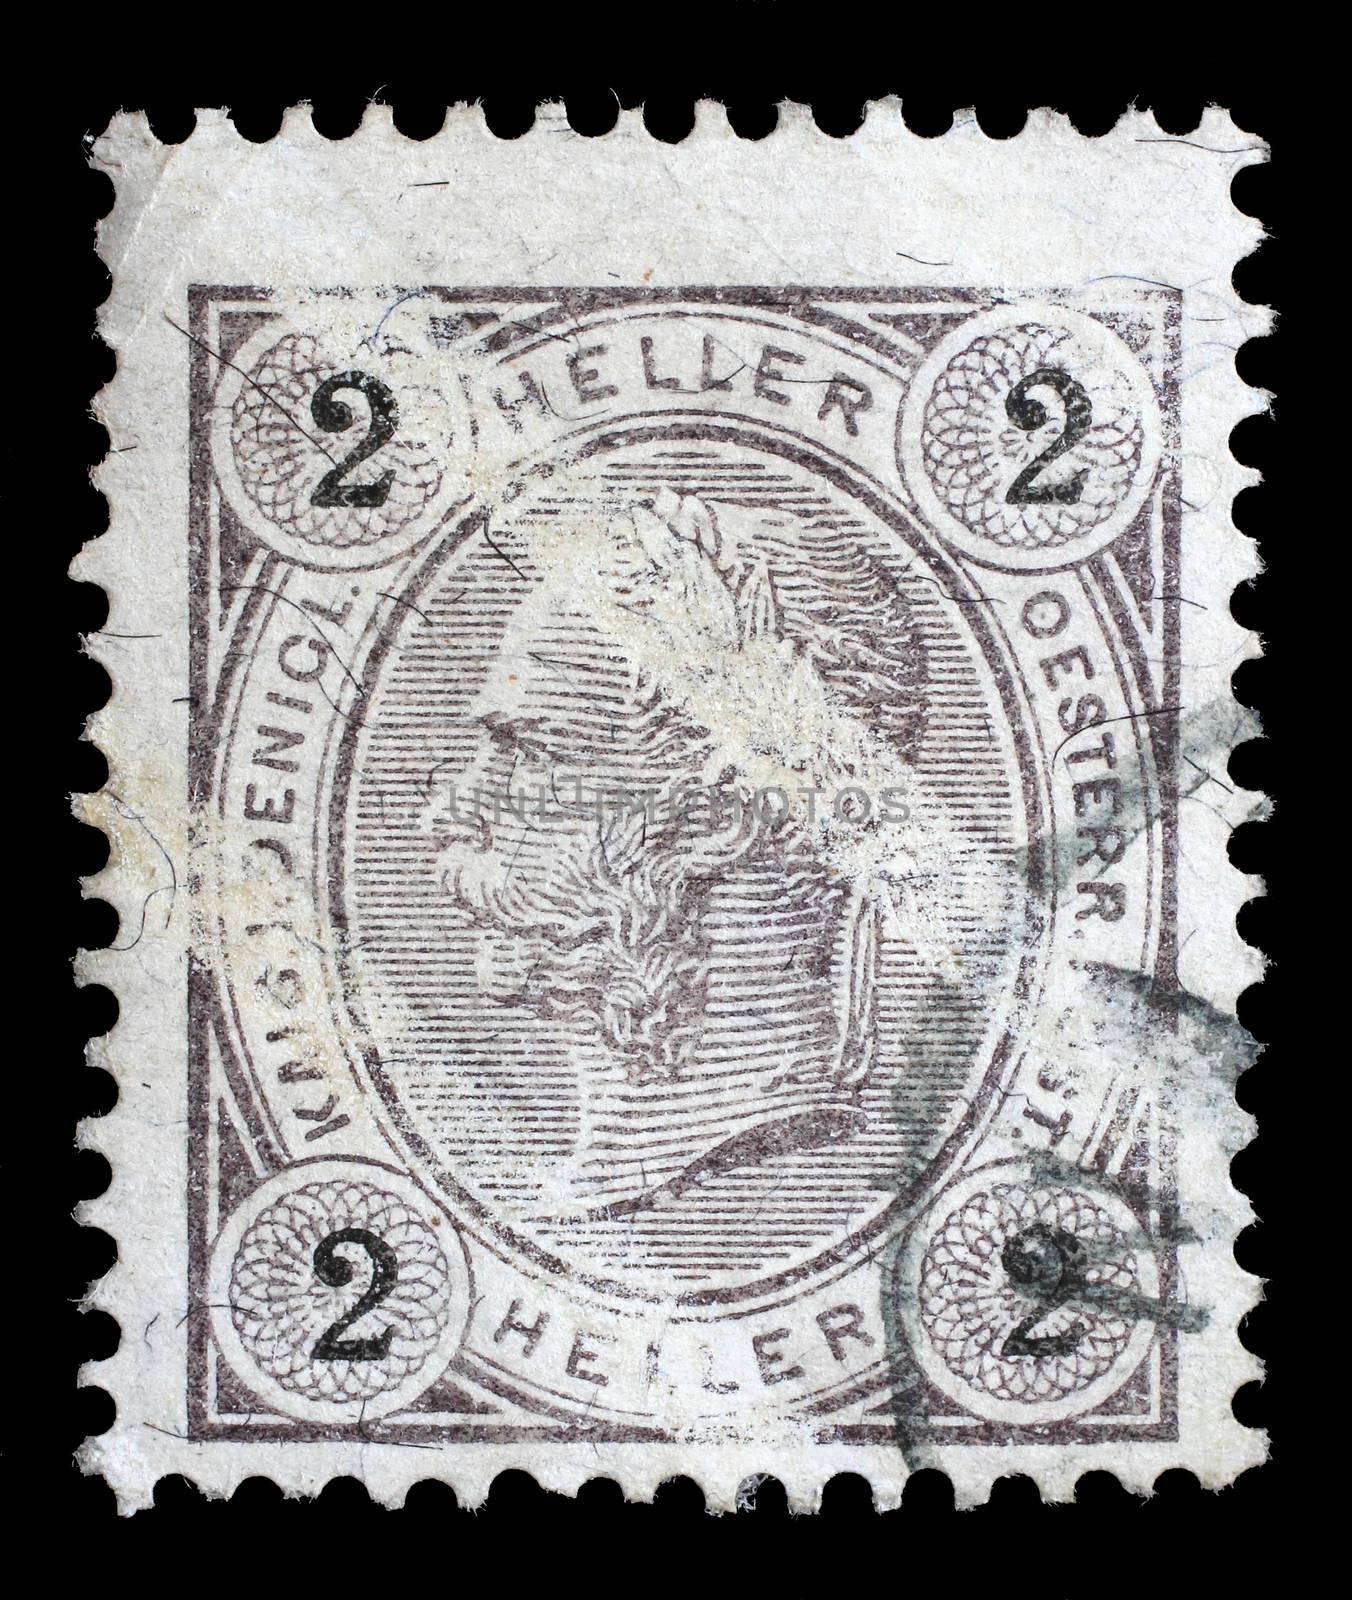 Stamp printed by Austria, shows Emperor Franz Joseph by atlas